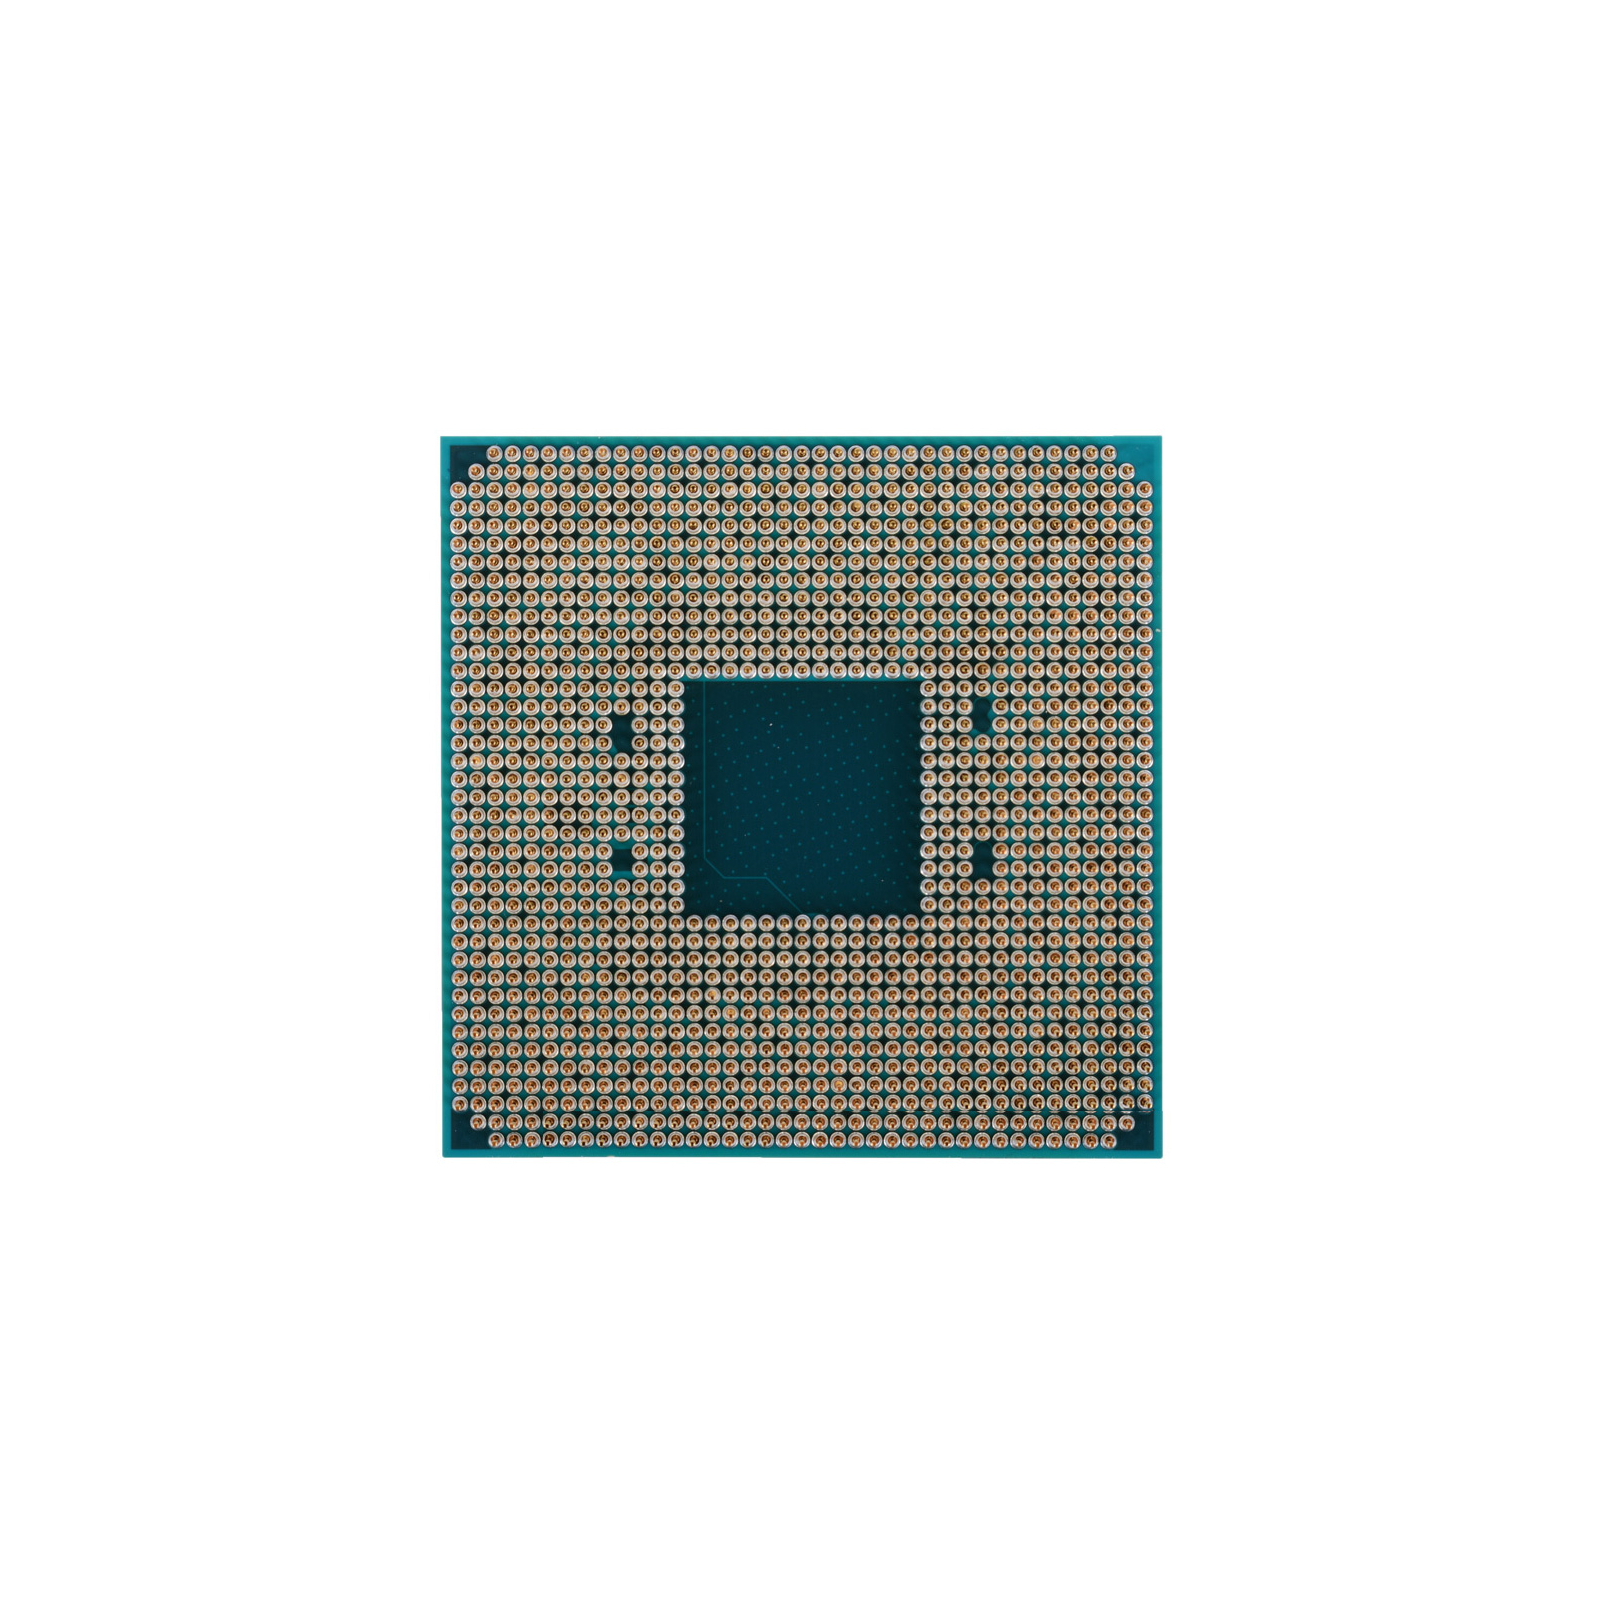 Процесор AMD Ryzen 3 3200G (YD3200C5M4MFH) зображення 2